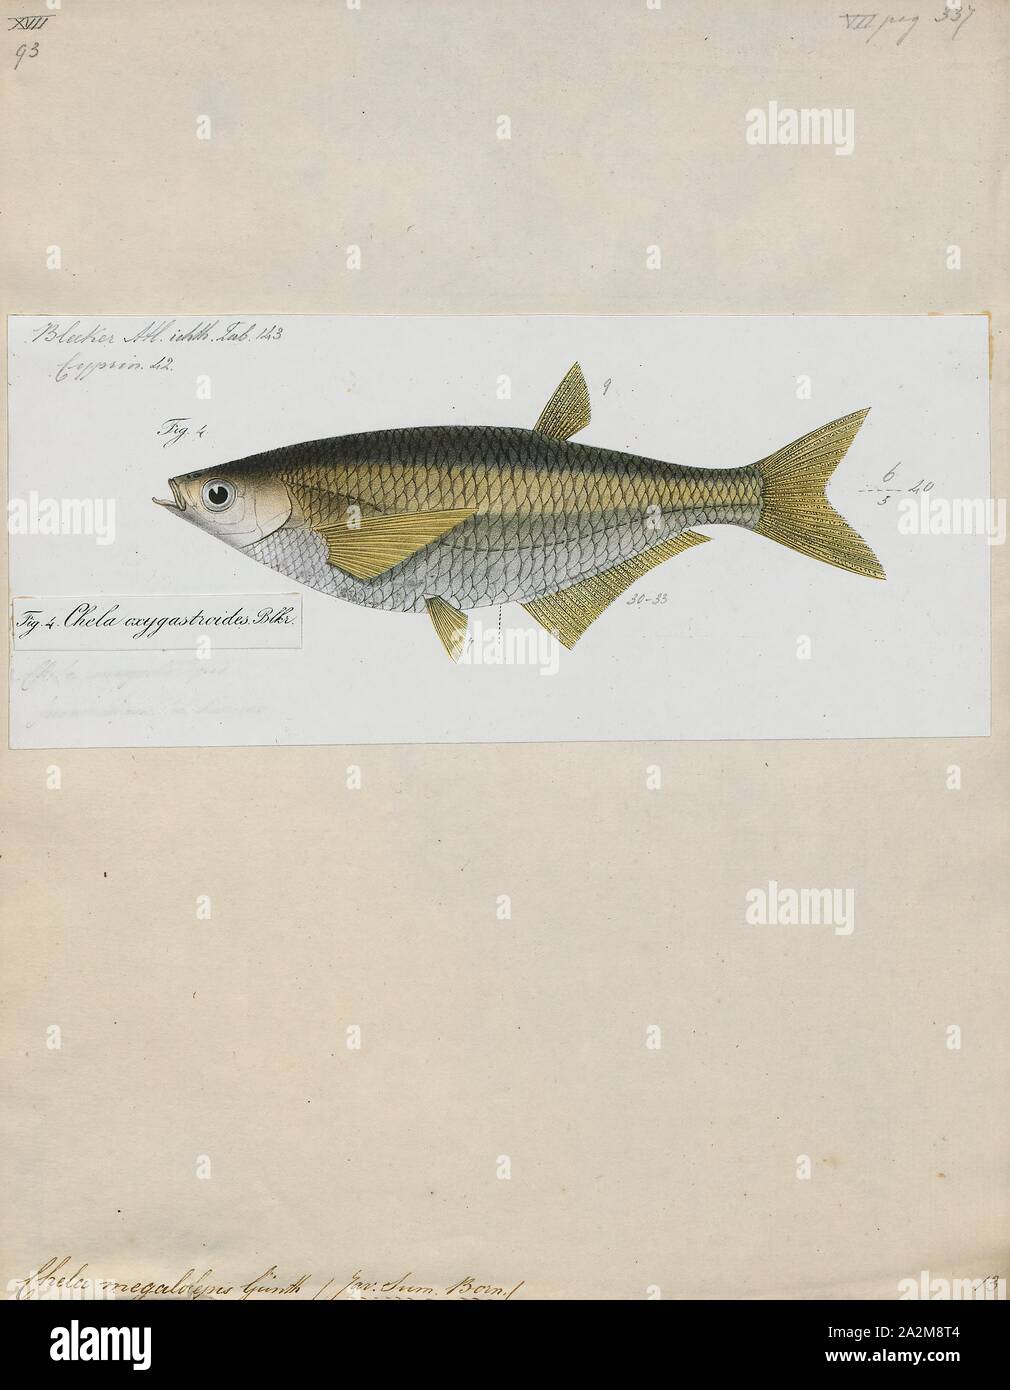 Chela megalolepis, Print, 1863 Stock Photo